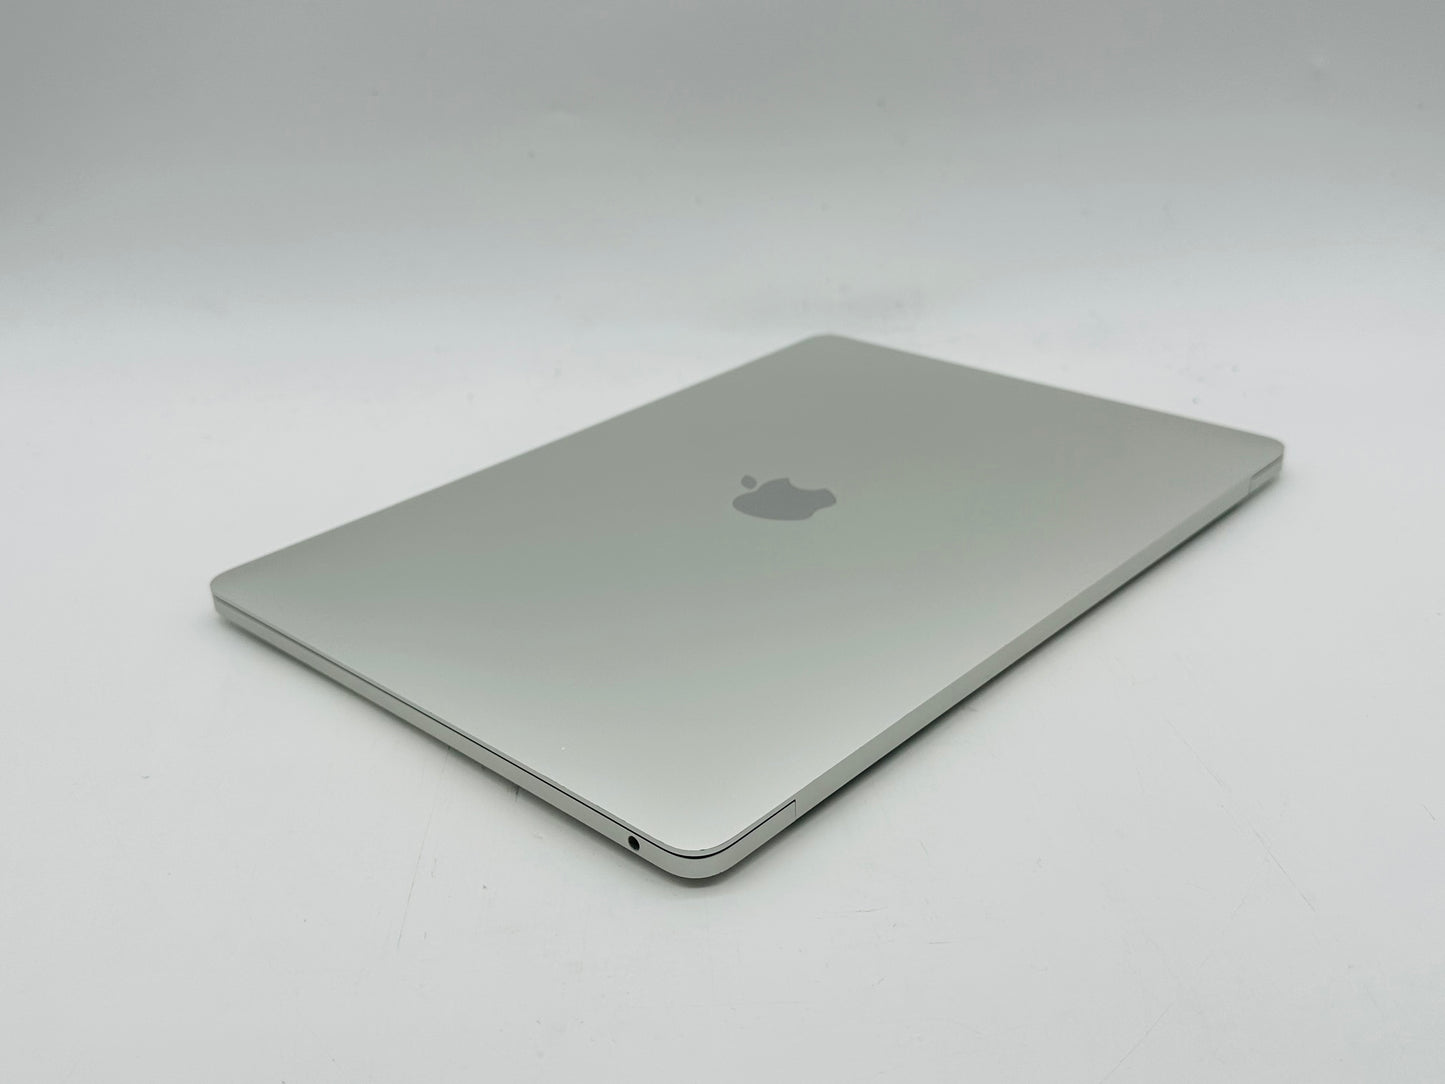 Apple 2019 MacBook Pro 13 in TB 1.4GHz Quad-Core i5 16GB RAM 128GB SSD IIPG645